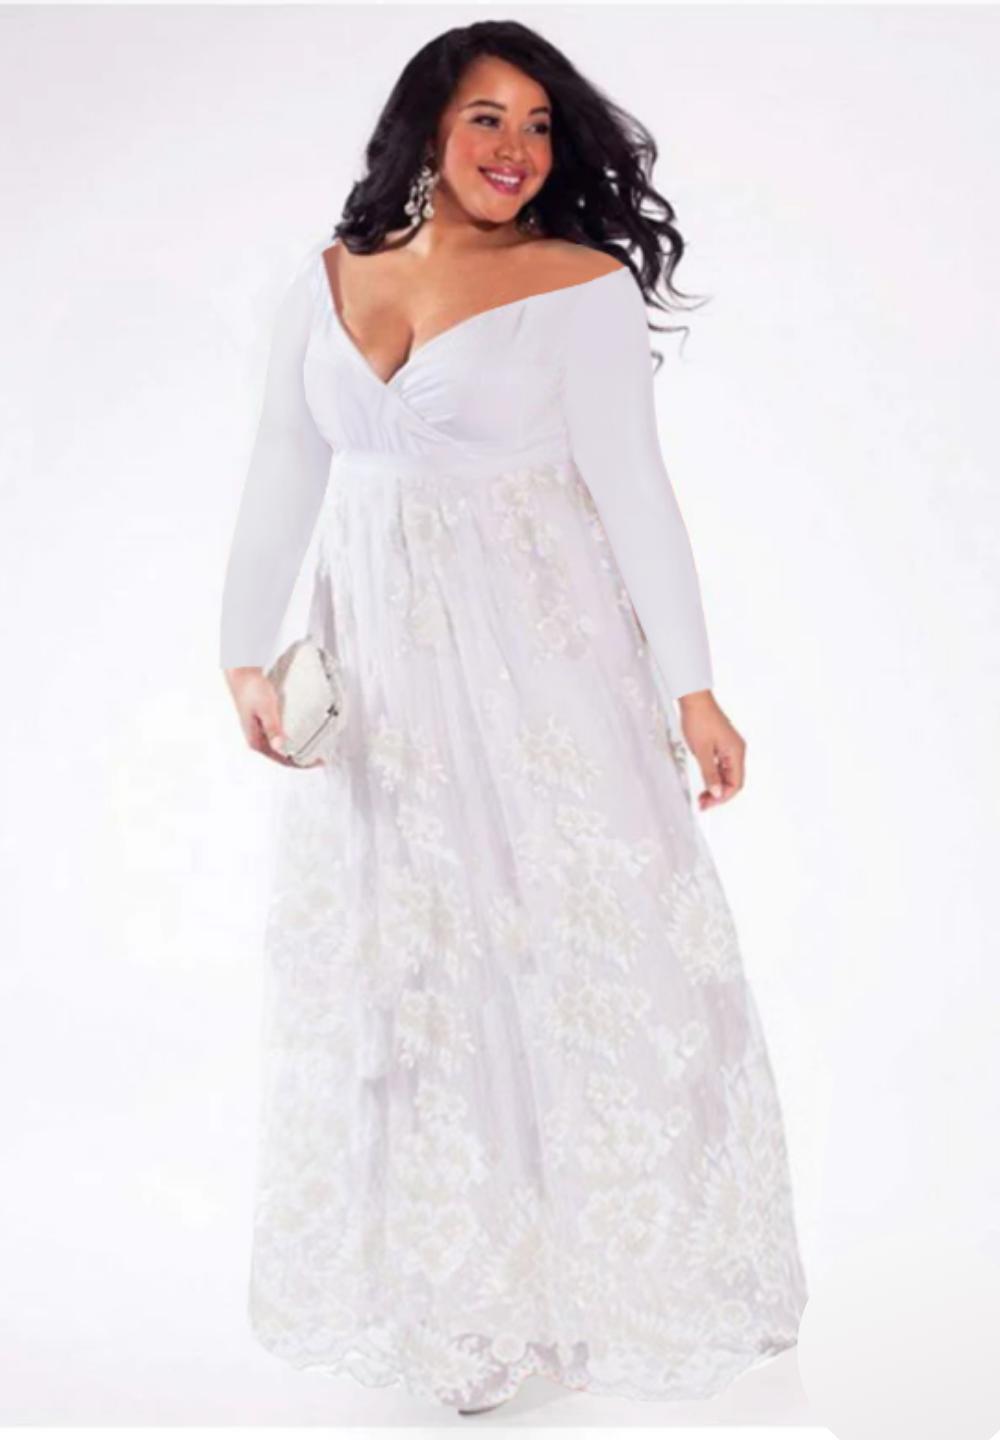 Emma - White Lace Dress – The Little Bride Dress Company